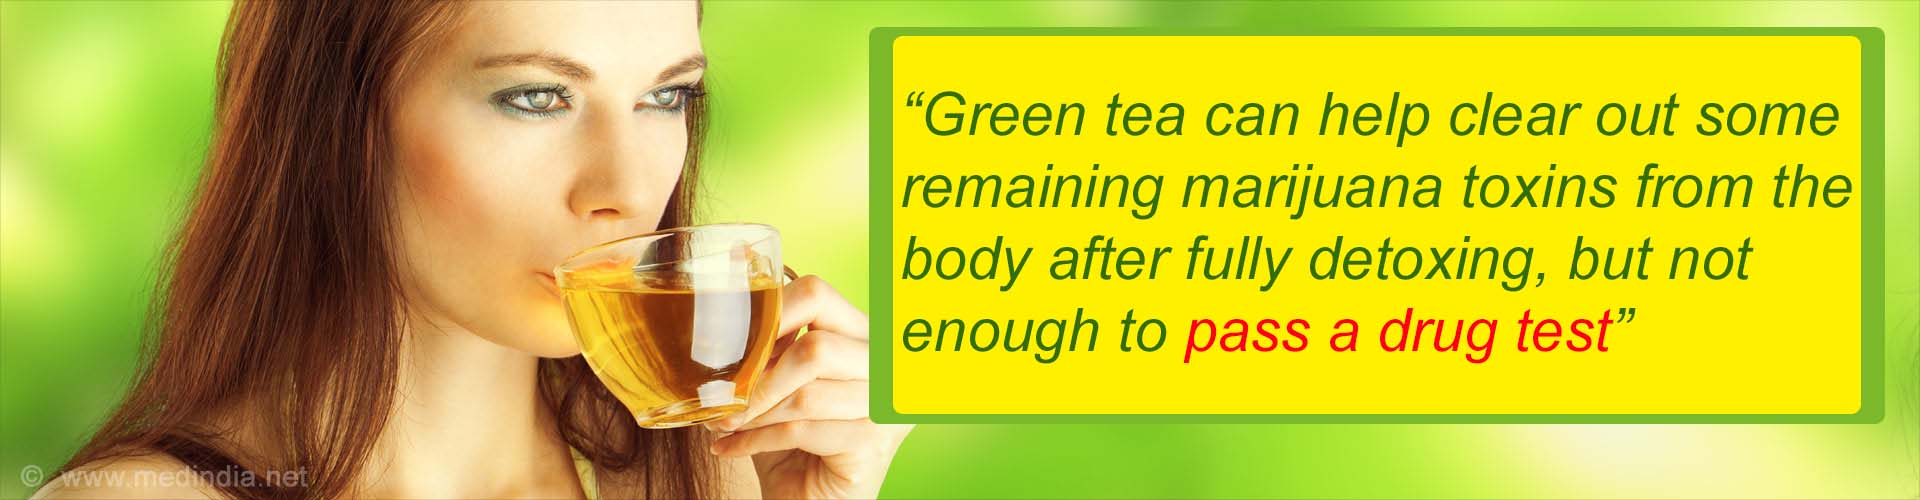 pass drug test green tea